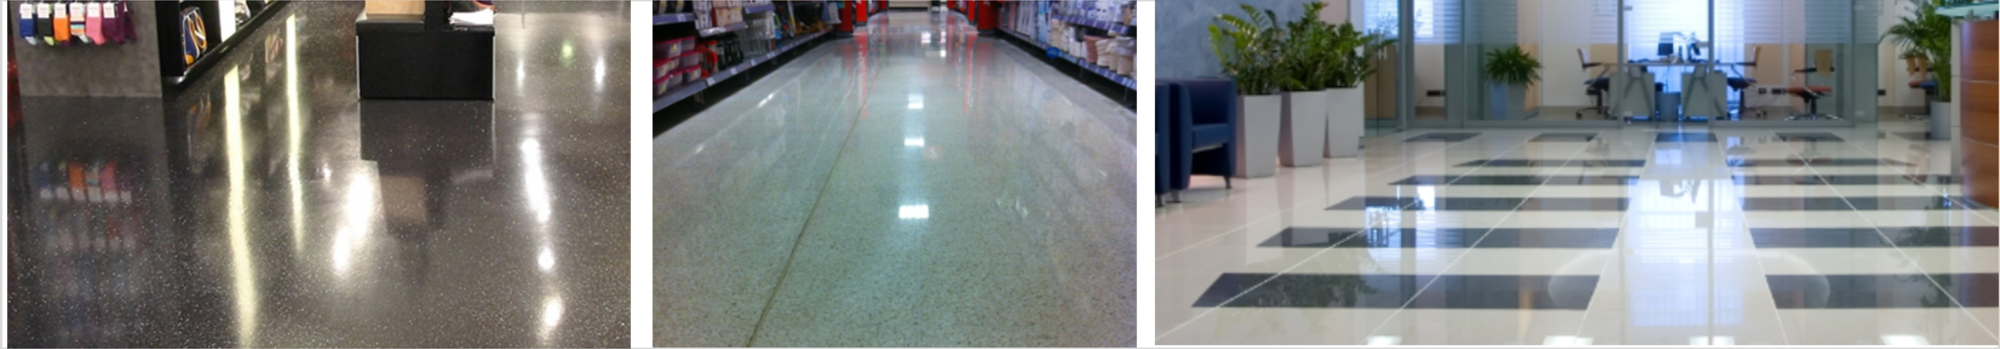 Floors Restoration and Sealing Image